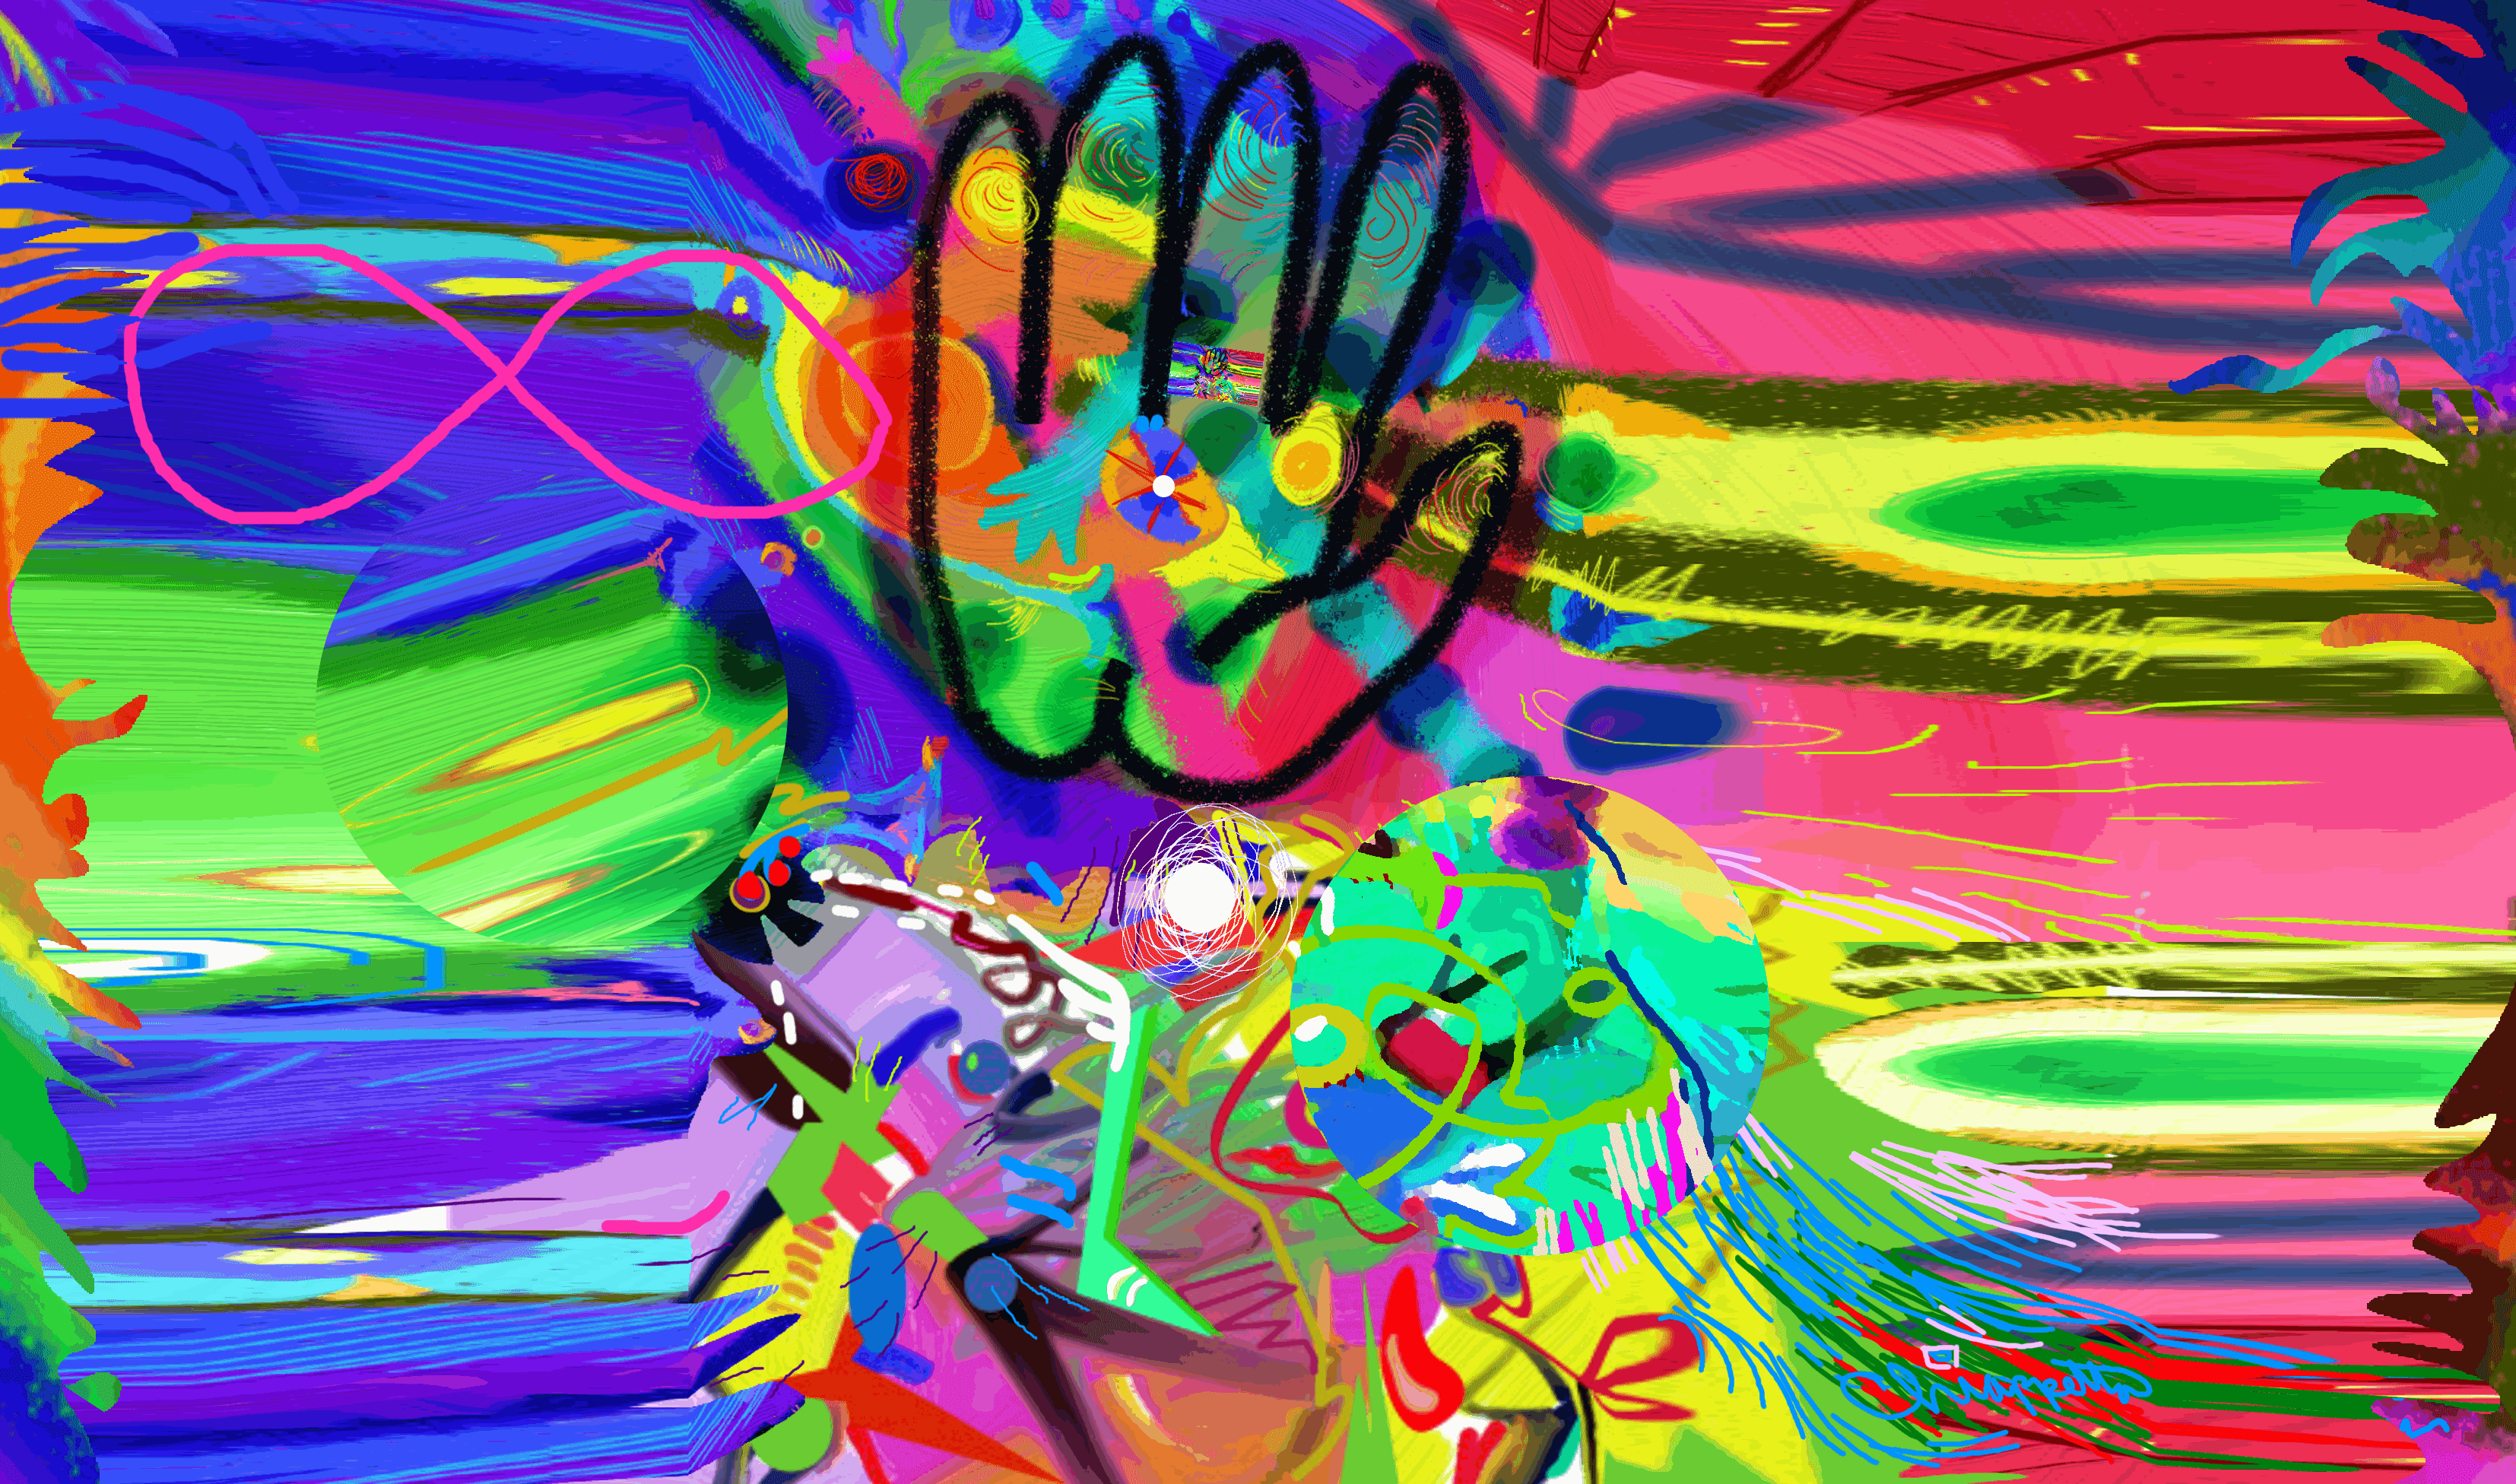 Hand of God is rare digital art by Joe Chiappetta